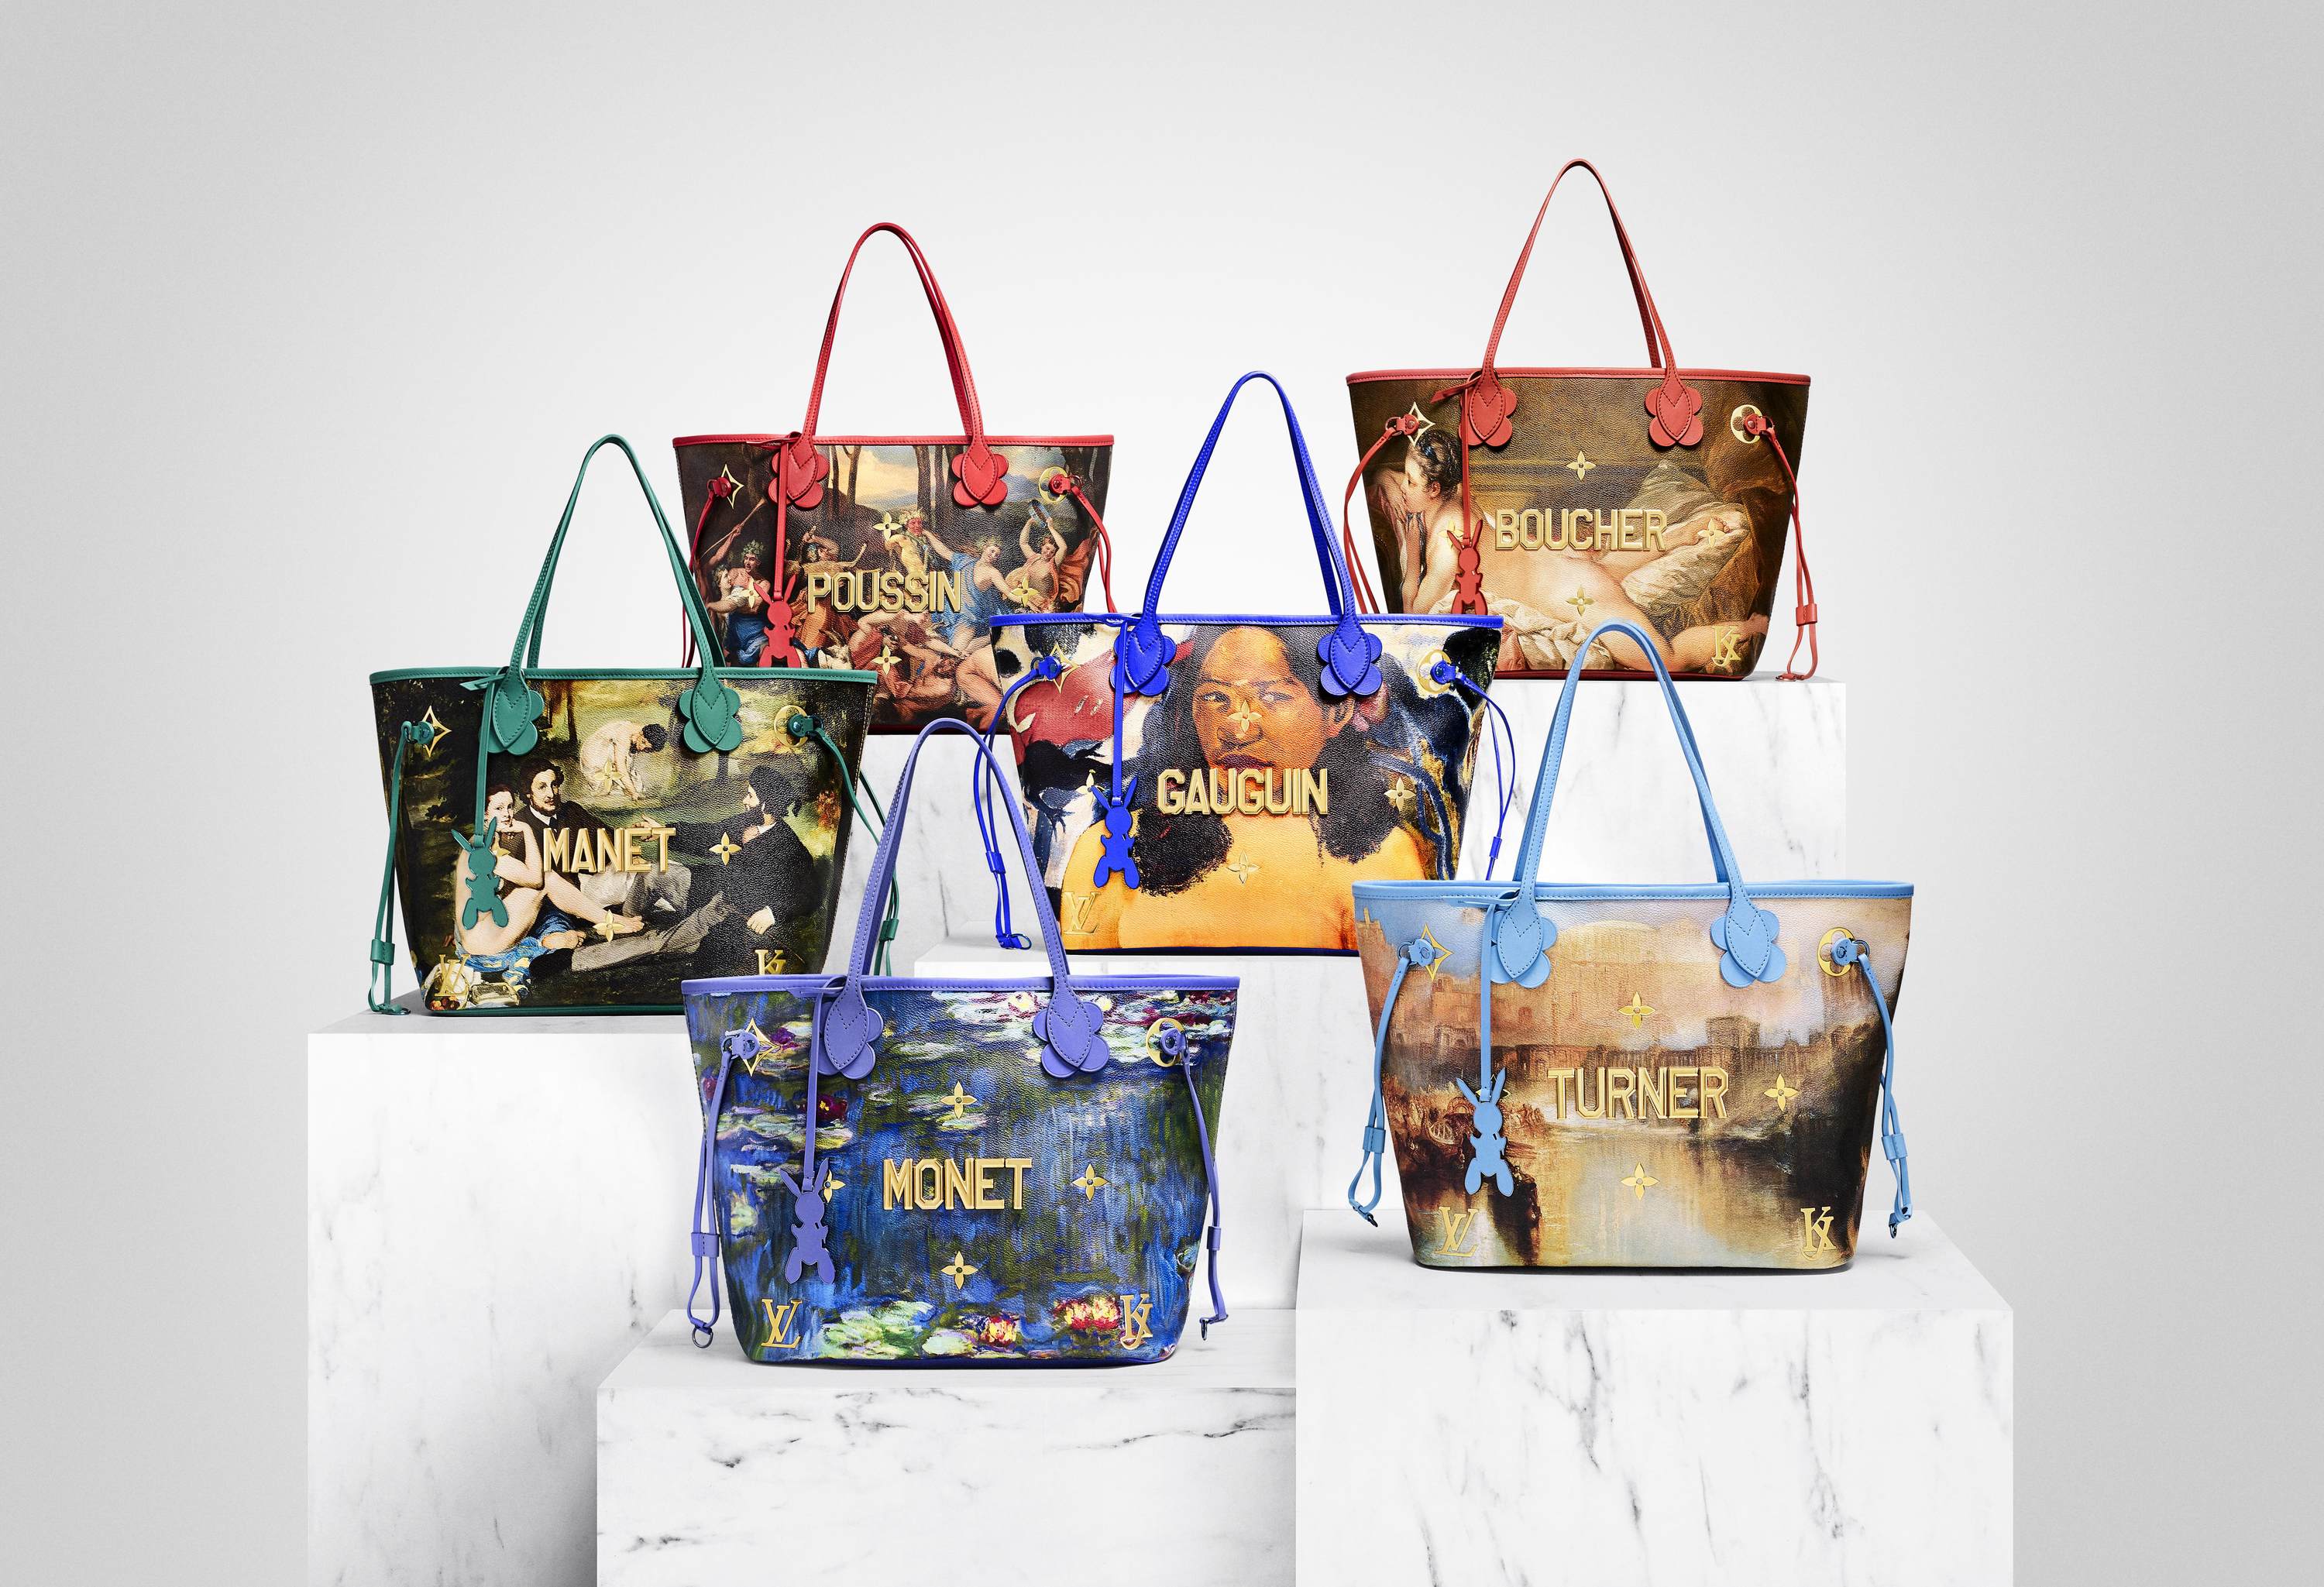 The Louis Vuitton x Jeff Koons handbag collection recreates the